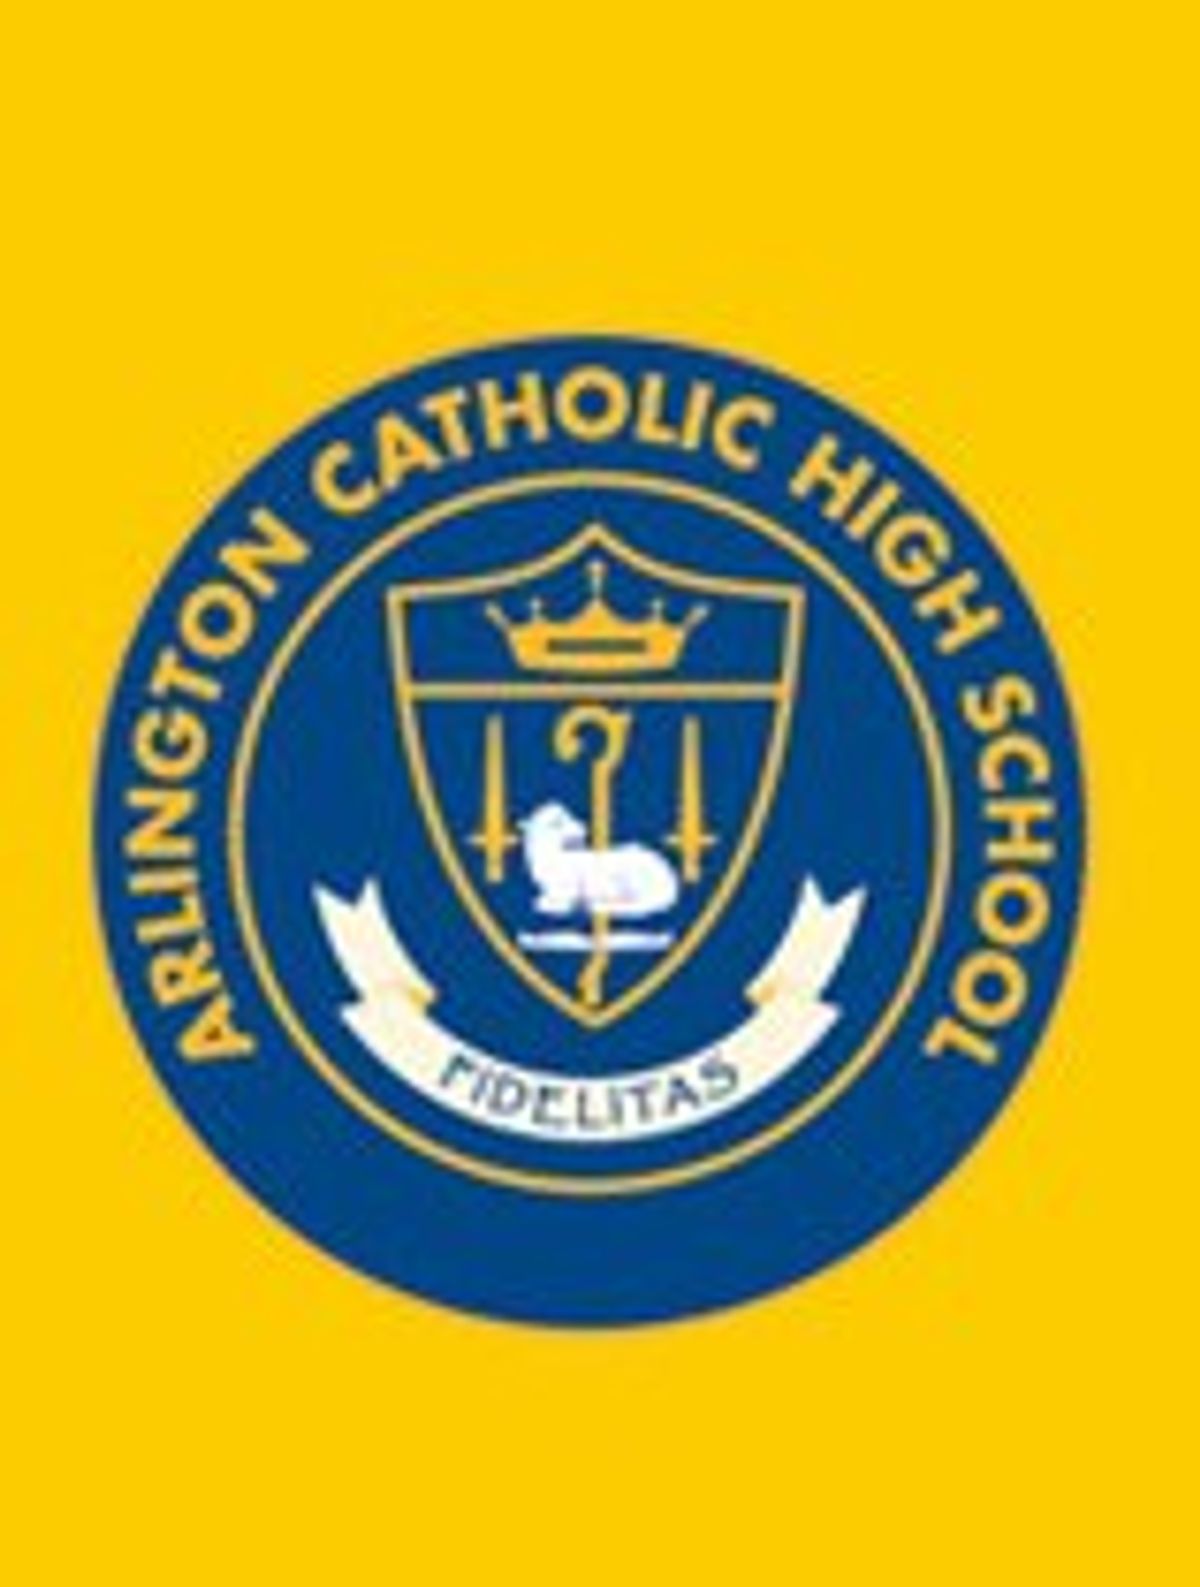 12 Signs You Went To Arlington Catholic High School